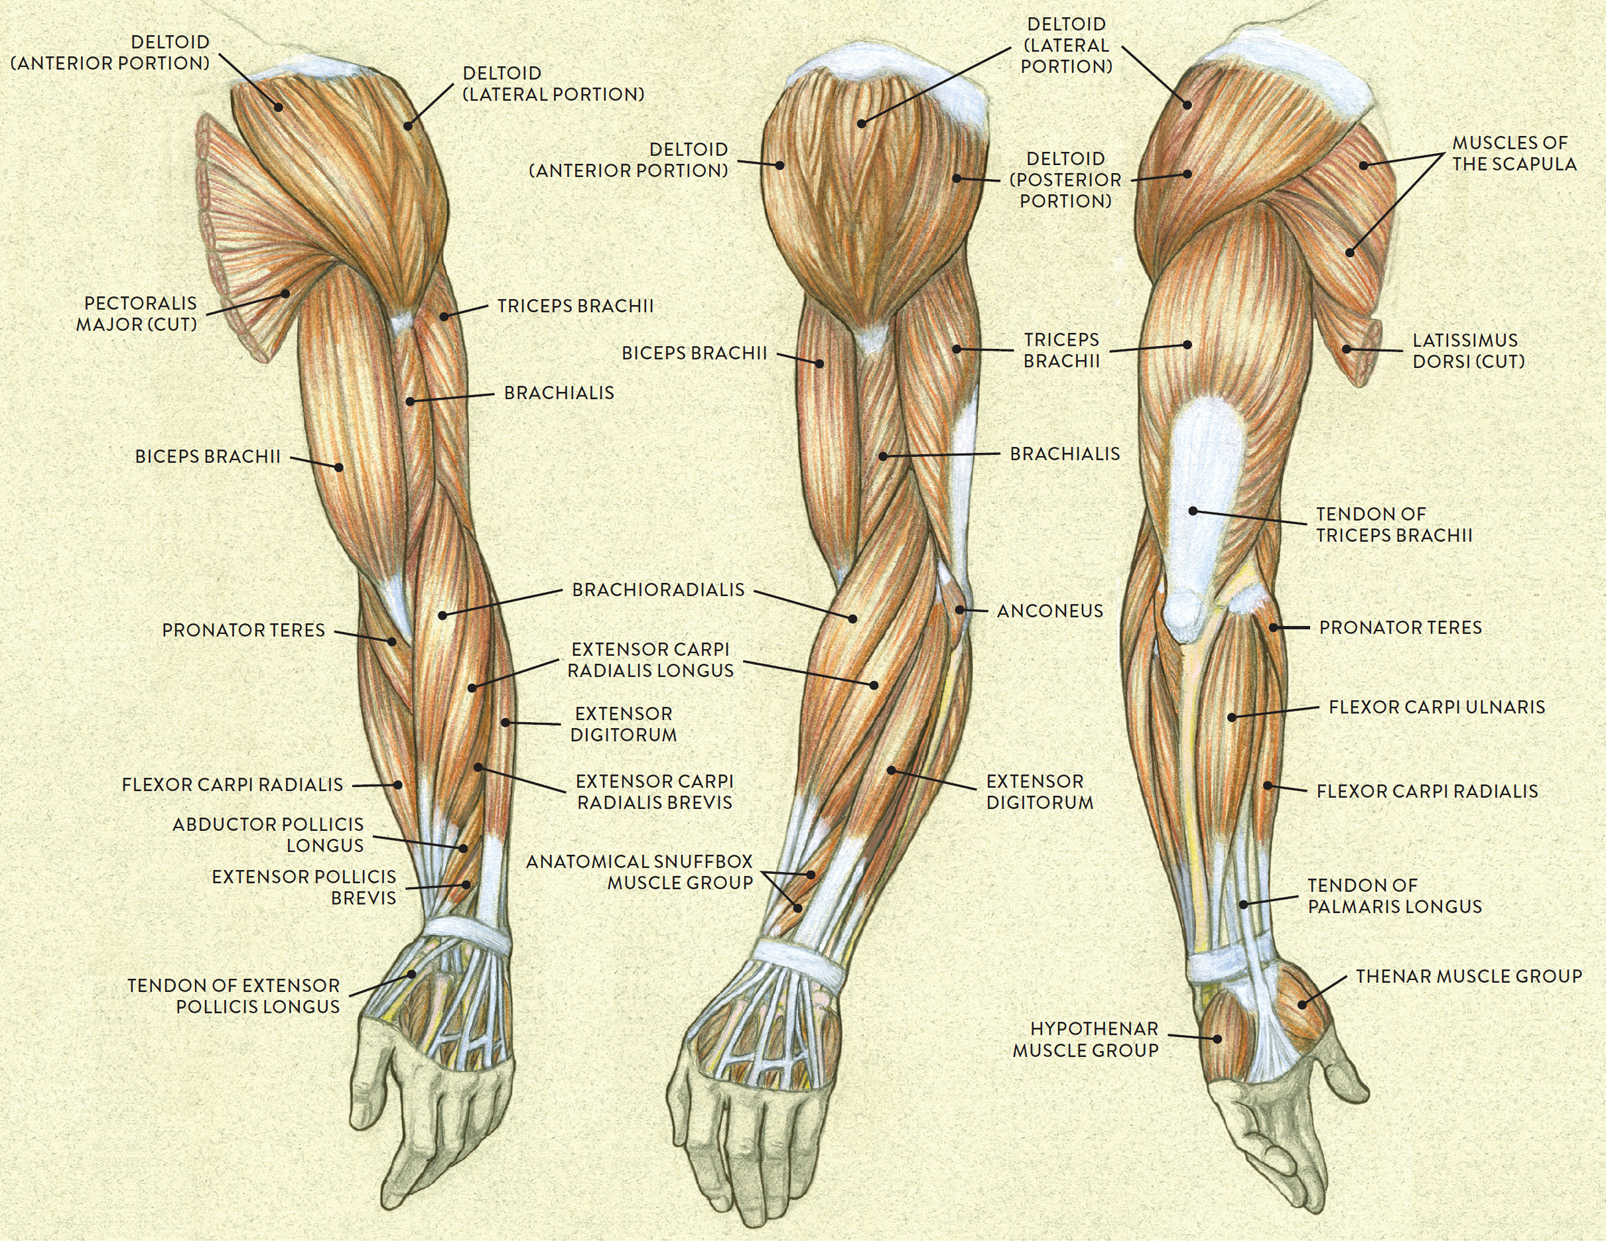 Анатомия мышц рук человека